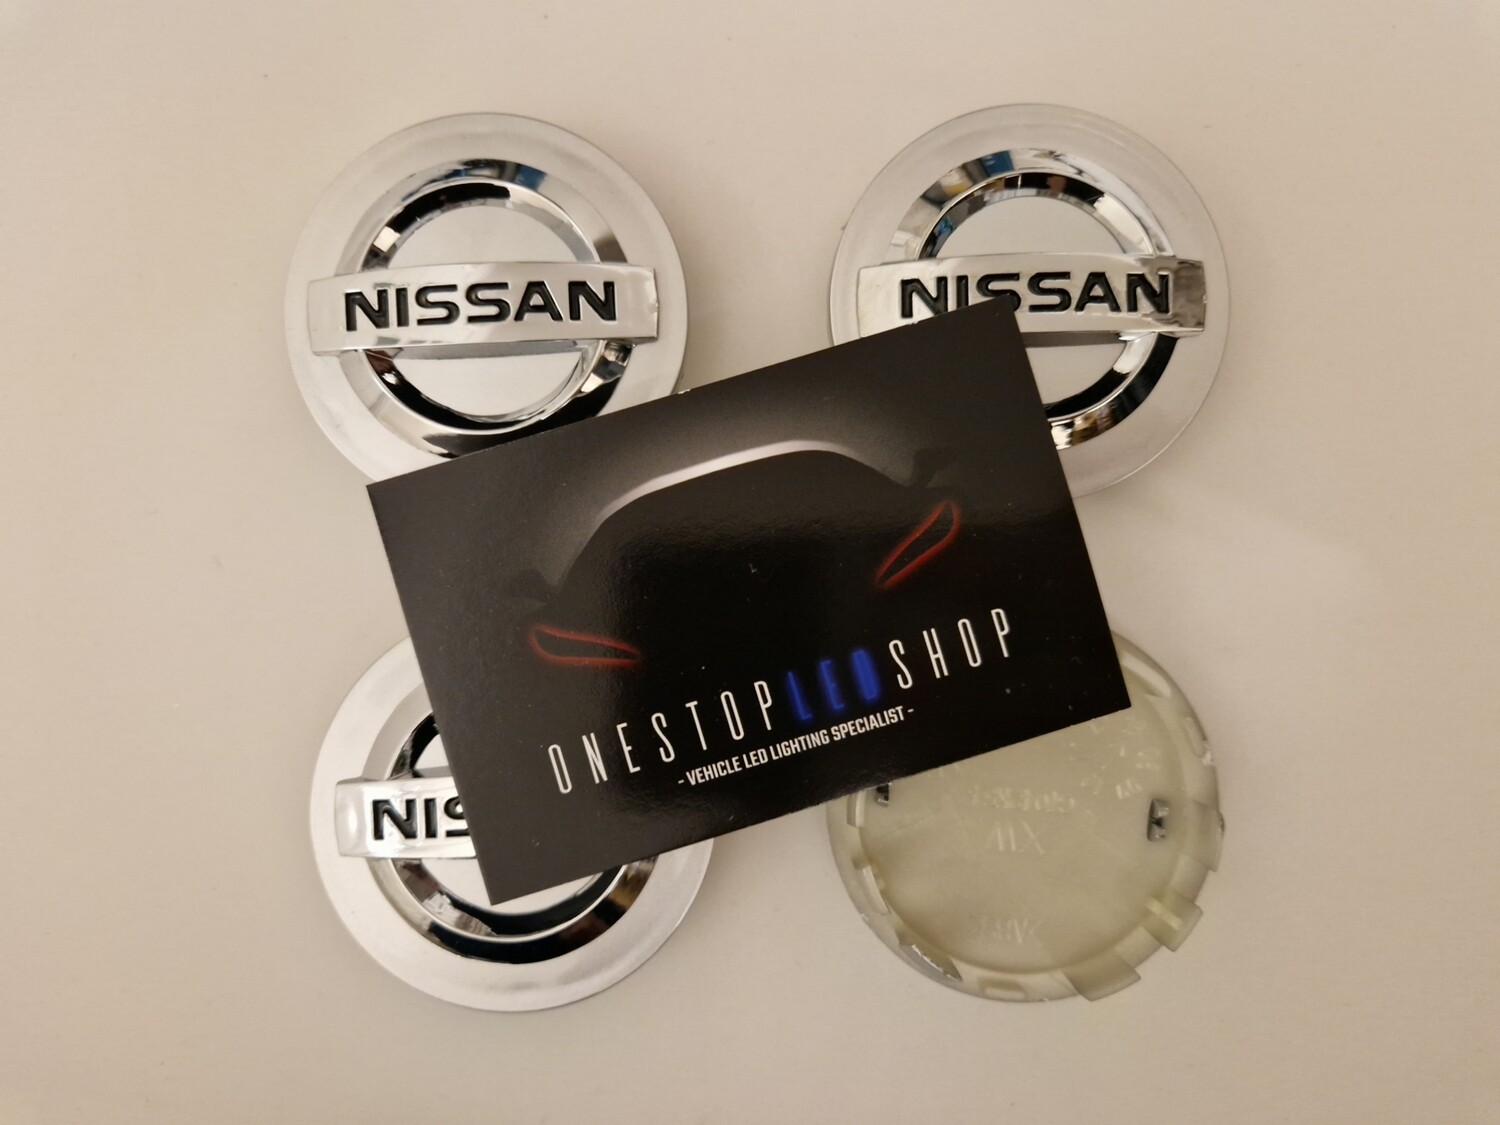 4 X Nissan silver 54mm Alloy wheel center hub caps